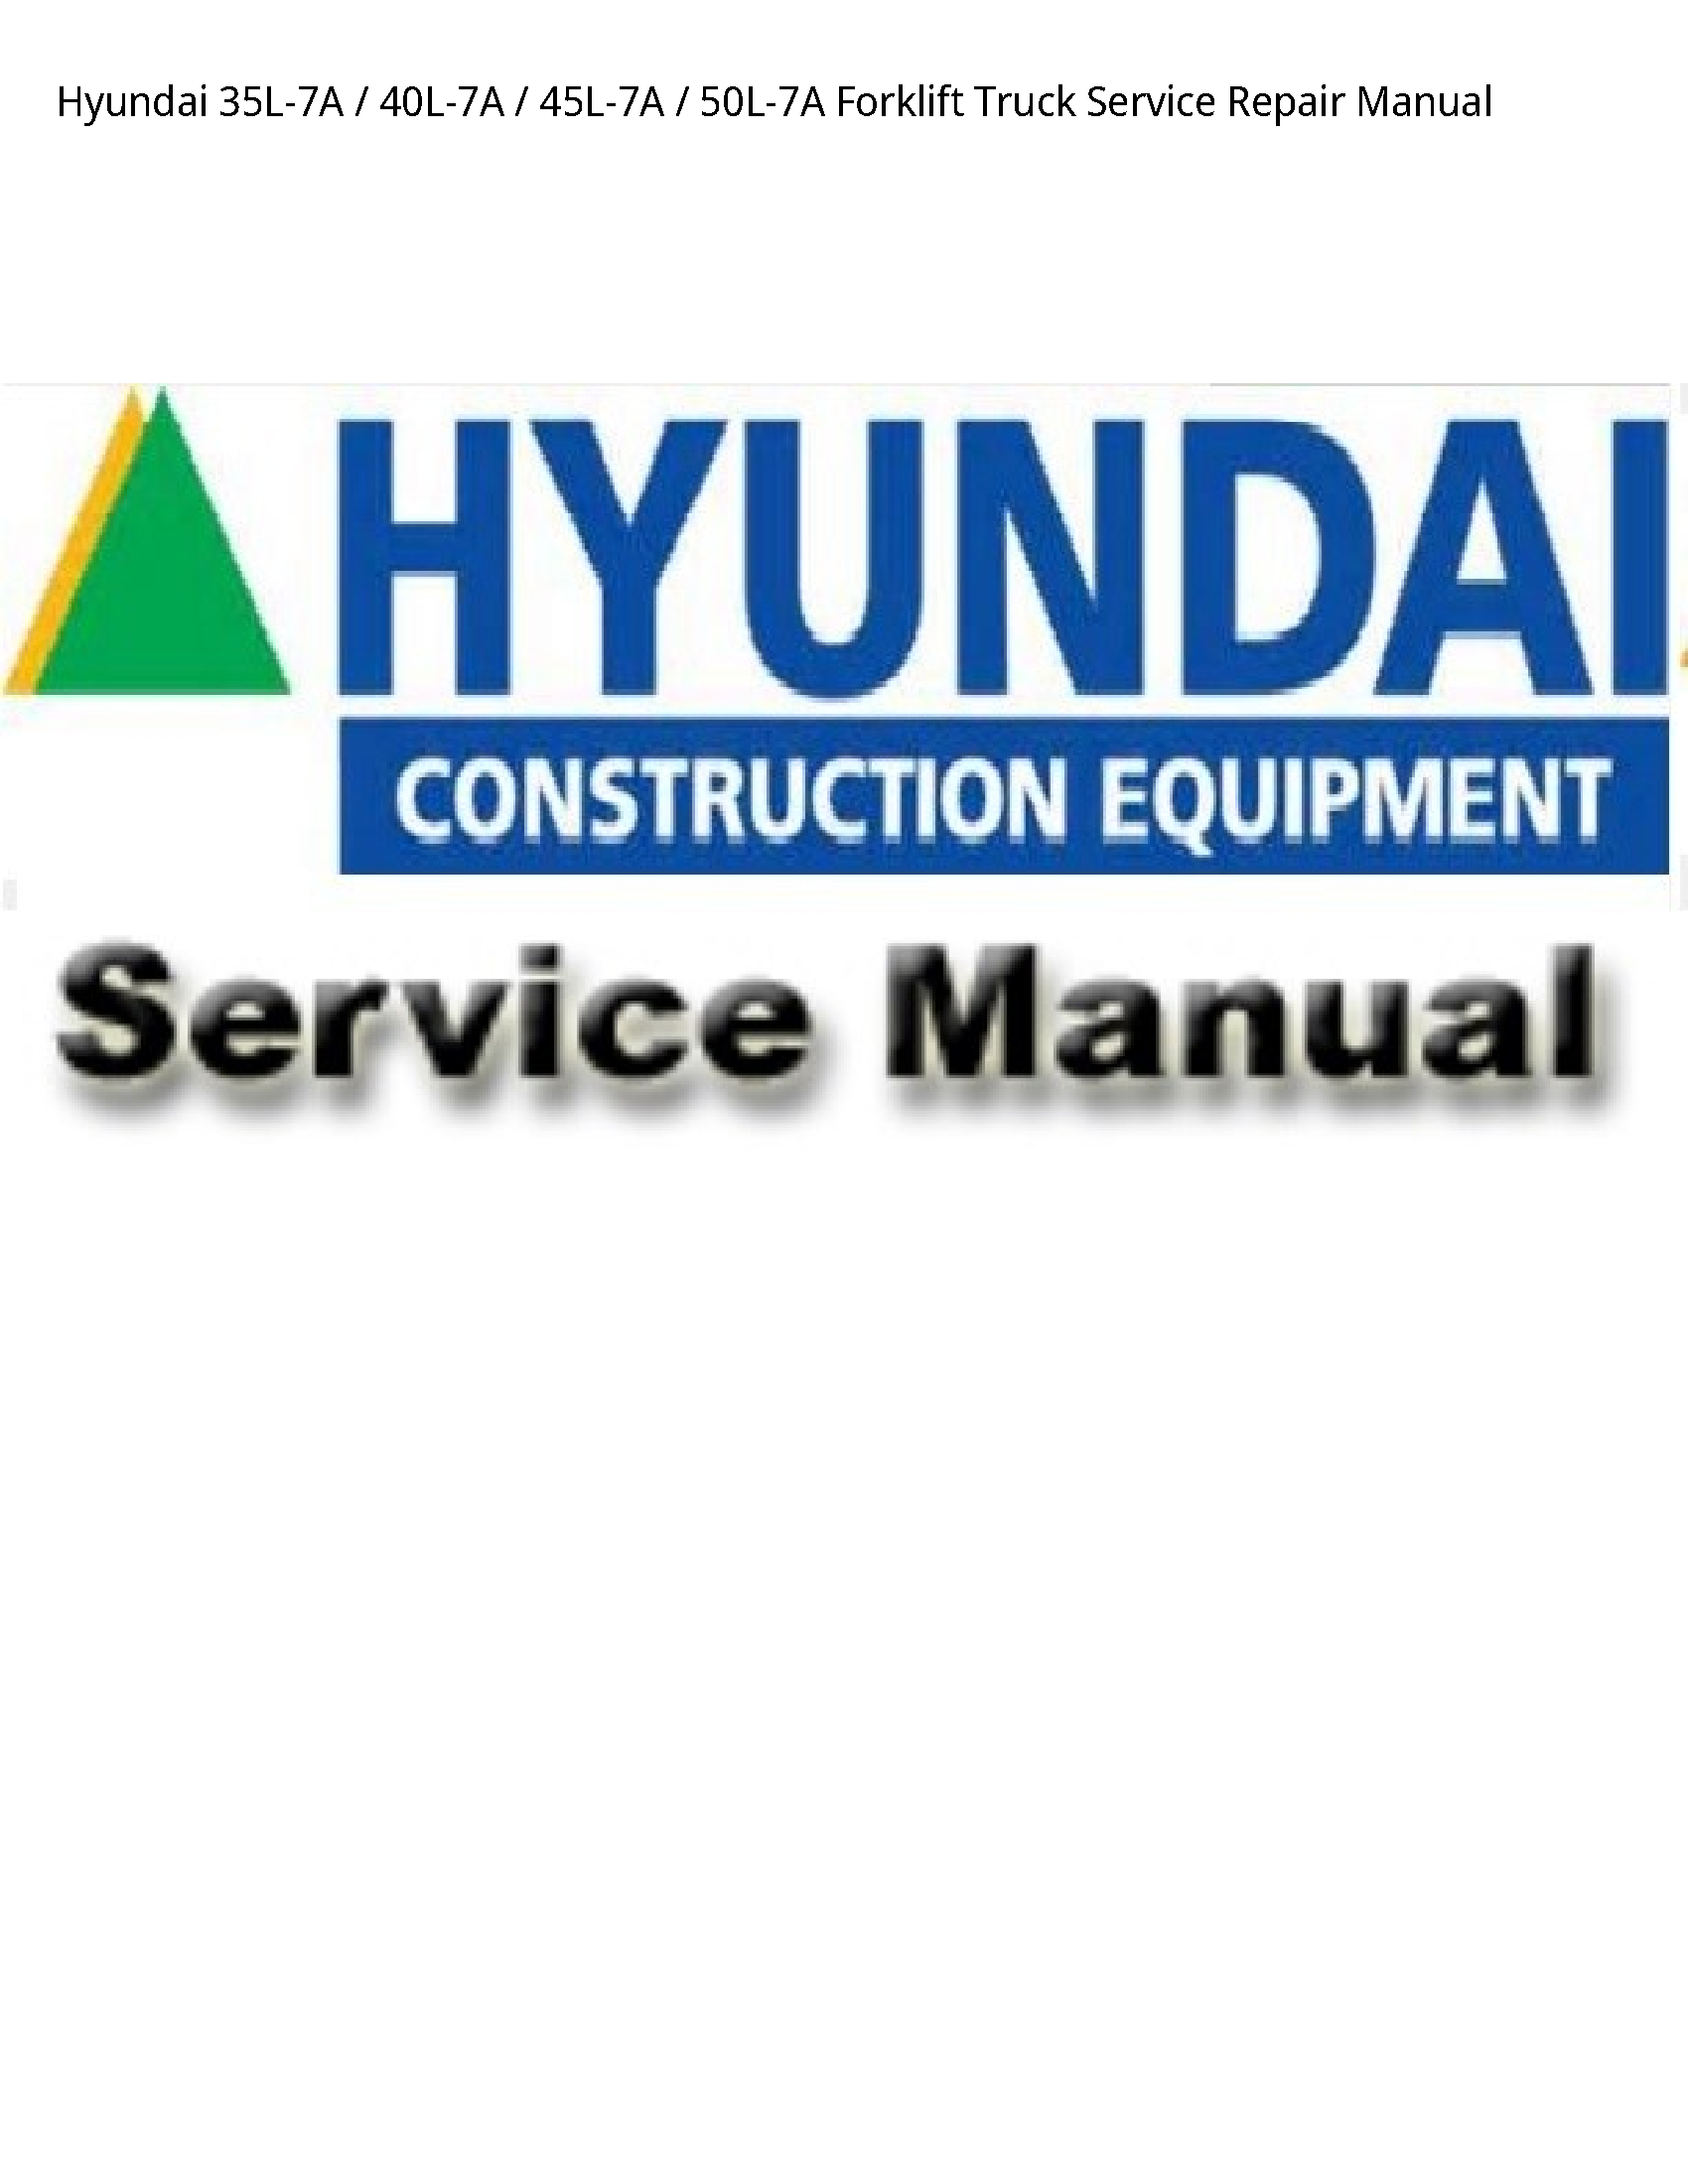 Hyundai 35L-7A Forklift Truck manual